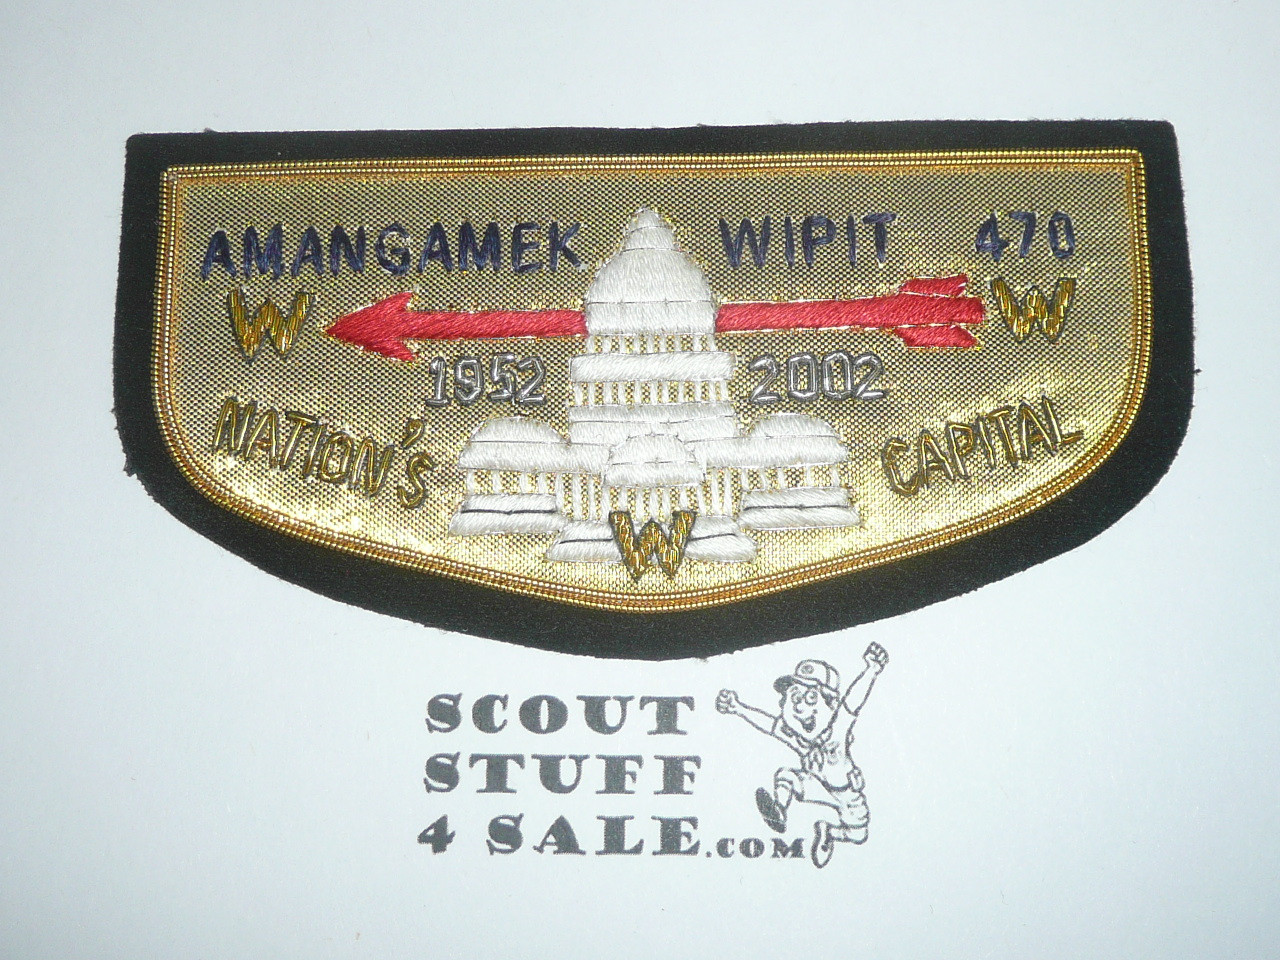 Order of the Arrow Lodge #470 Amangamek-Wipit b3 50th Anniversary Bullion Flap Patch